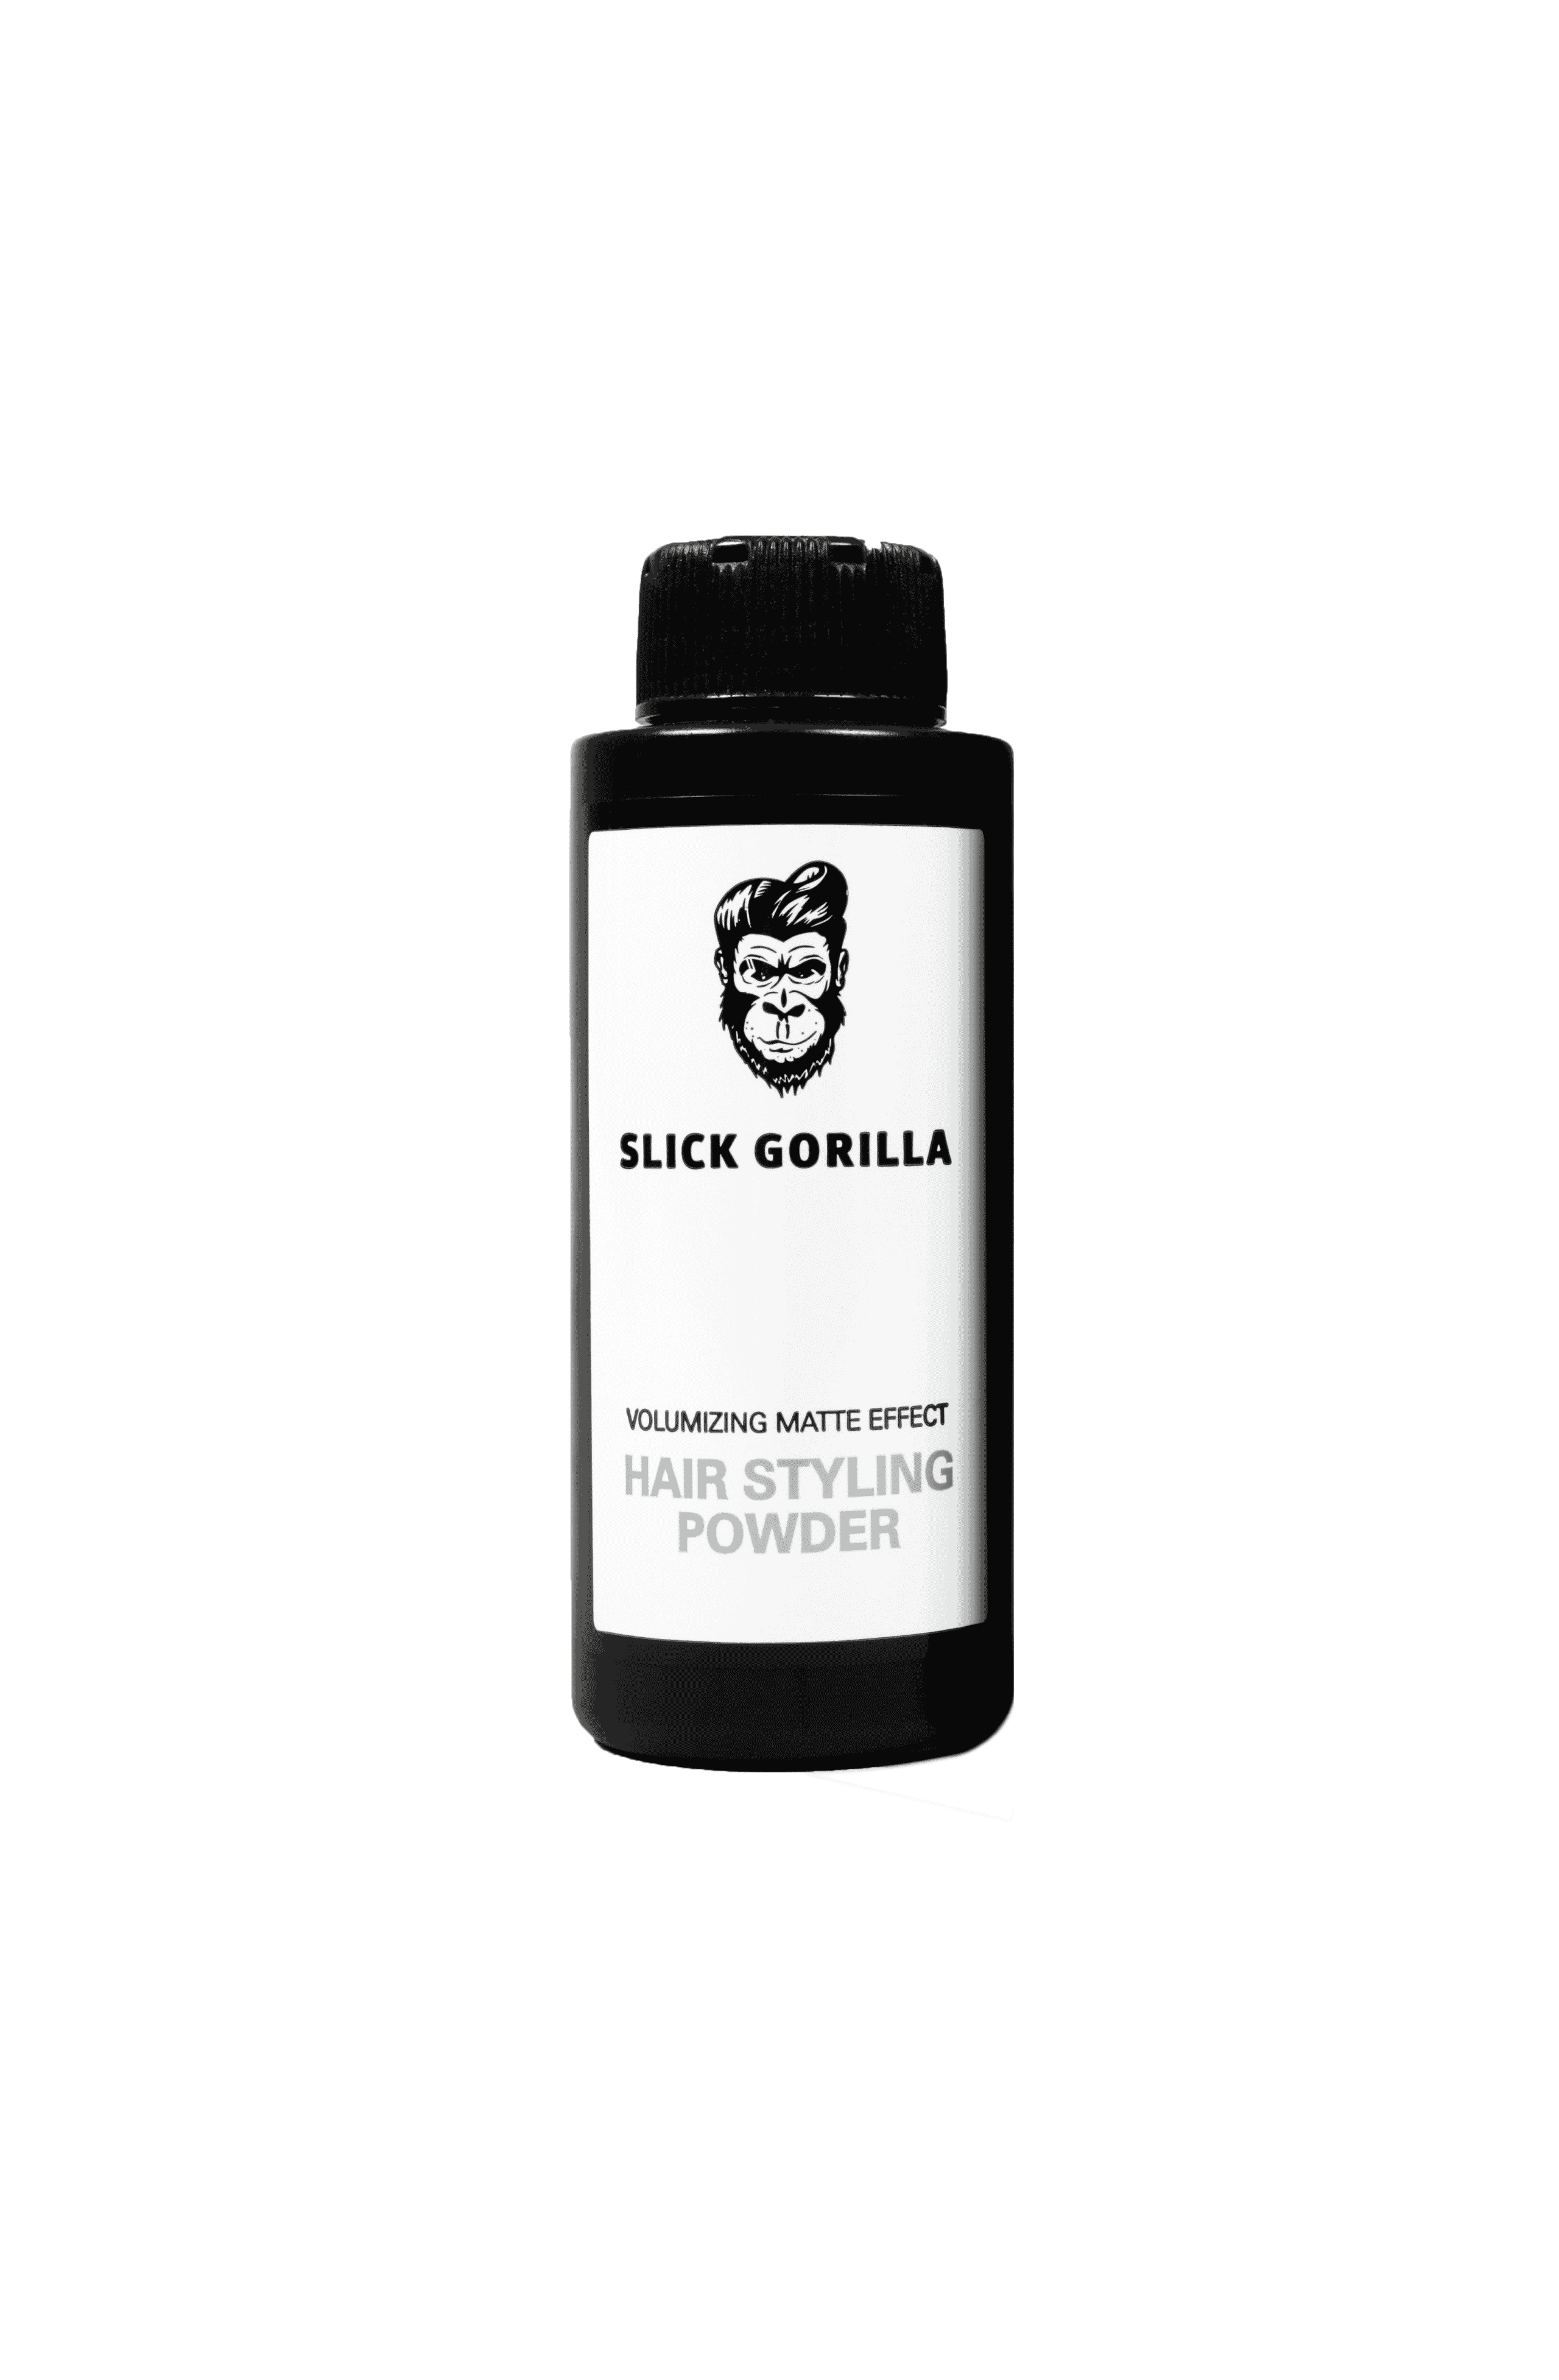 https://www.barberdepots.com/wp-content/uploads/2019/03/slick-goirlla-hair-styling-powder-bottle.png